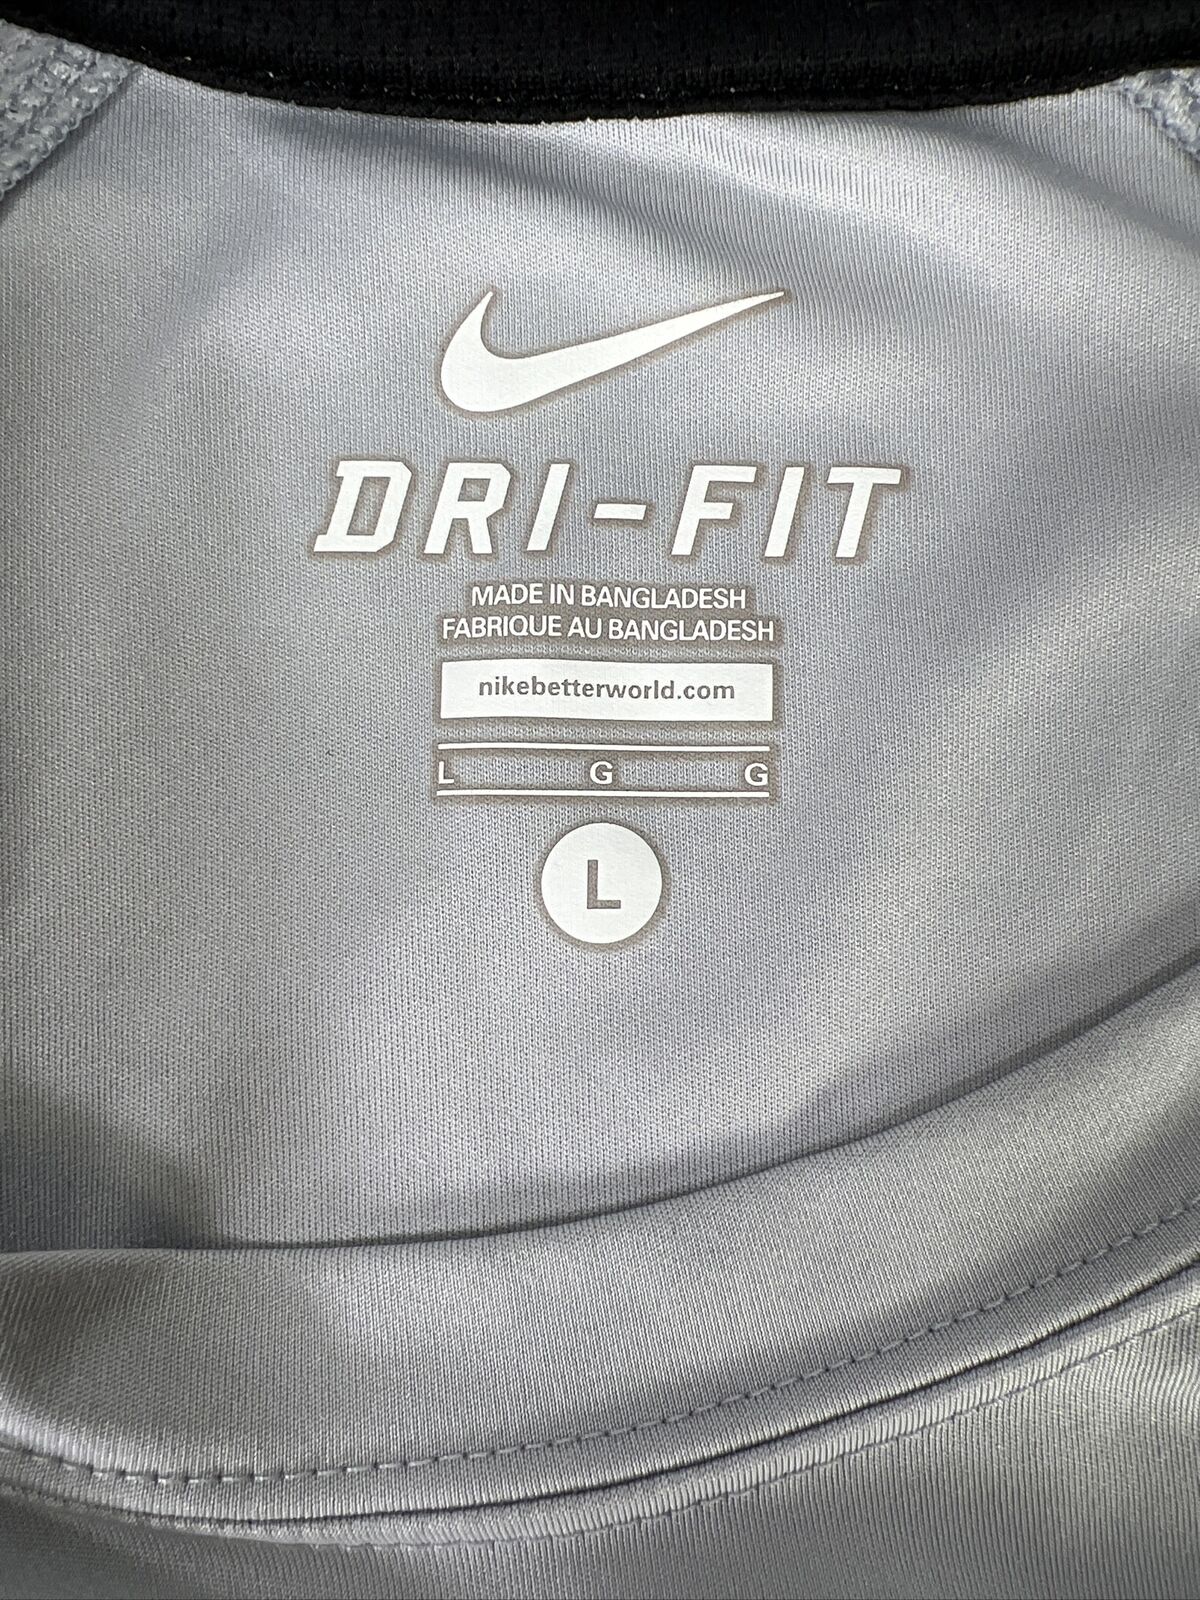 Nike Men's Gray Dri-Fit Breathe Short Sleeve Athletic Shirt - L